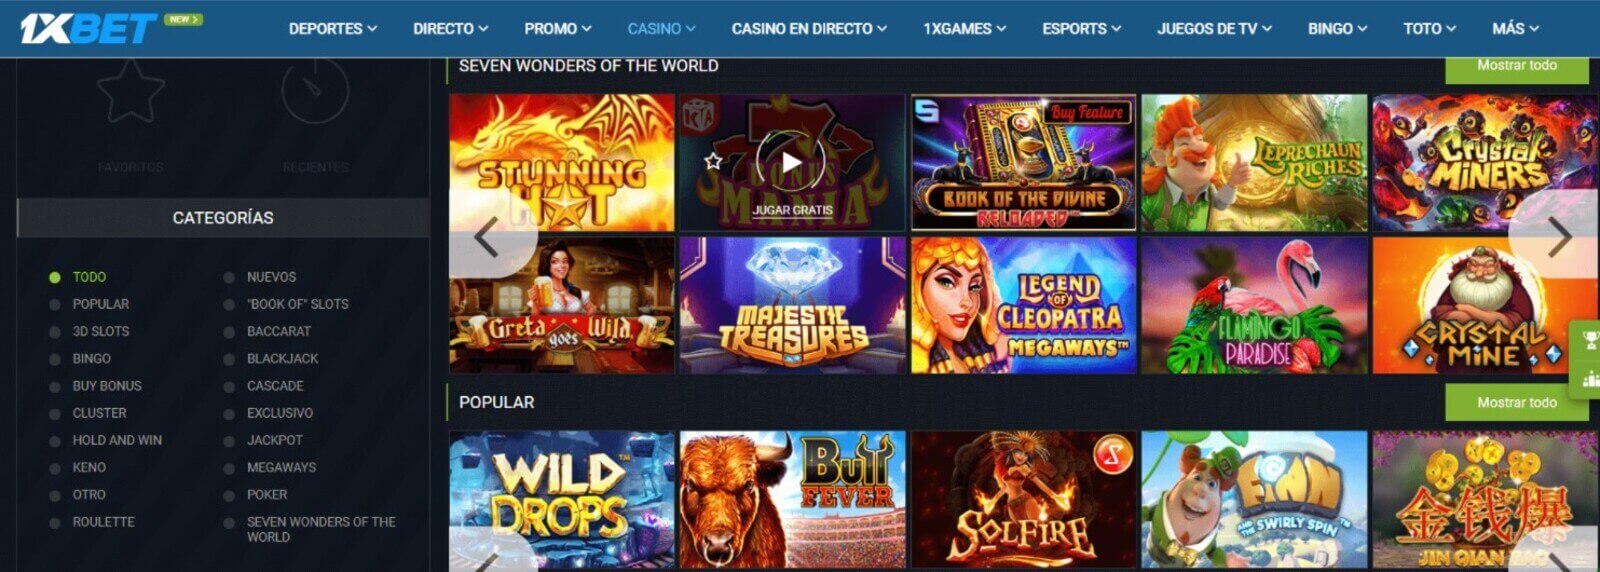 1xBet Casino online de Latinoamérica